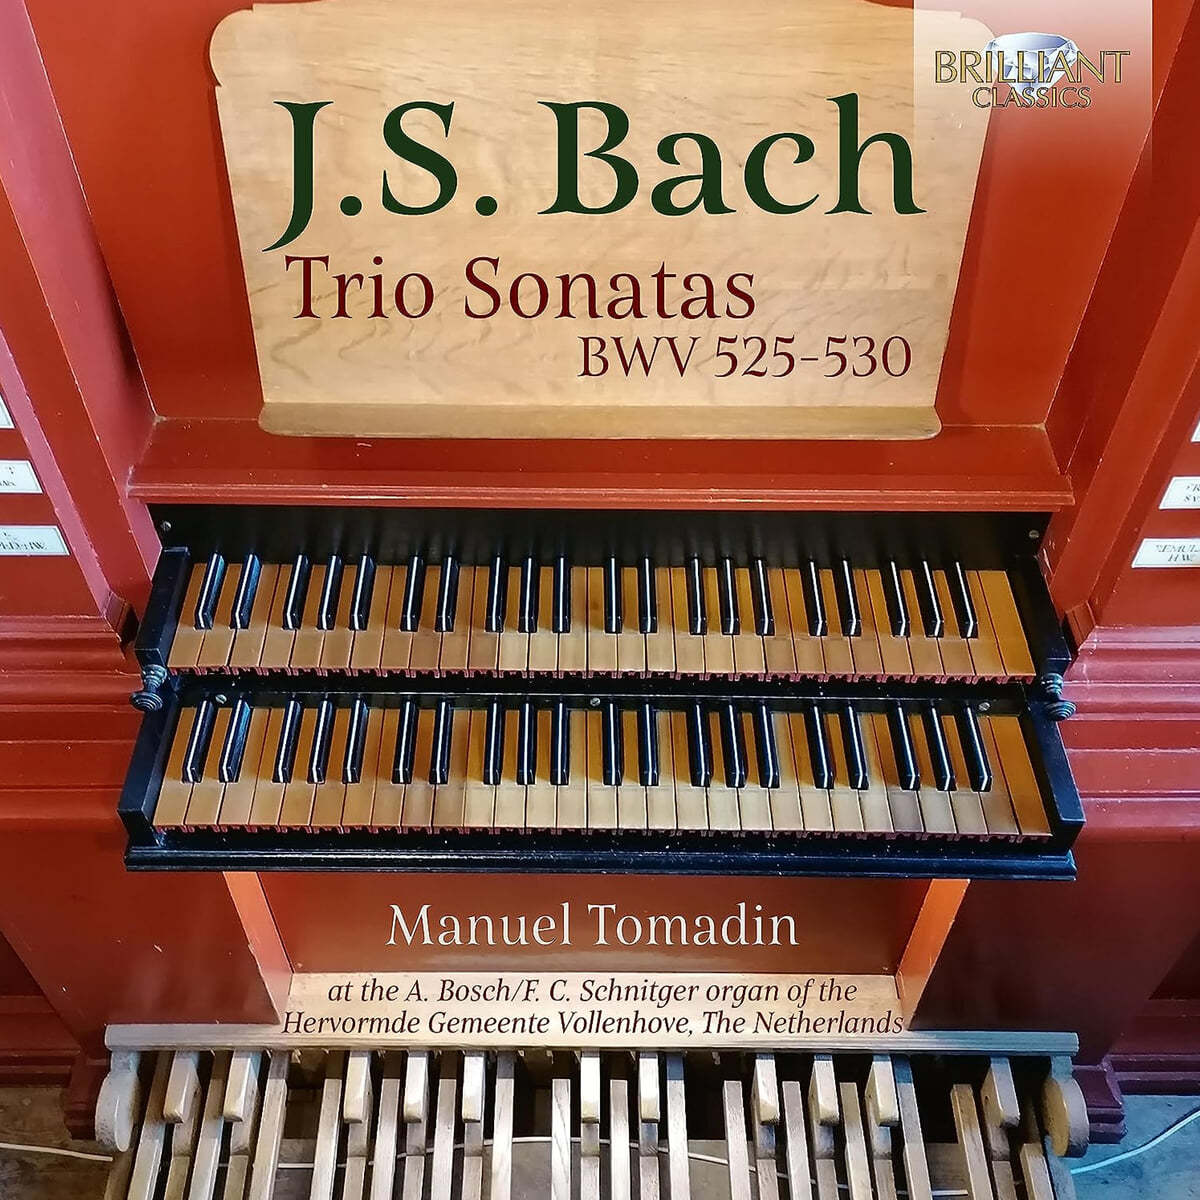 Manuel Tomadin 바흐: 트리오 소나타 (J.S. Bach: Trio Sonatas BWV 525-530)